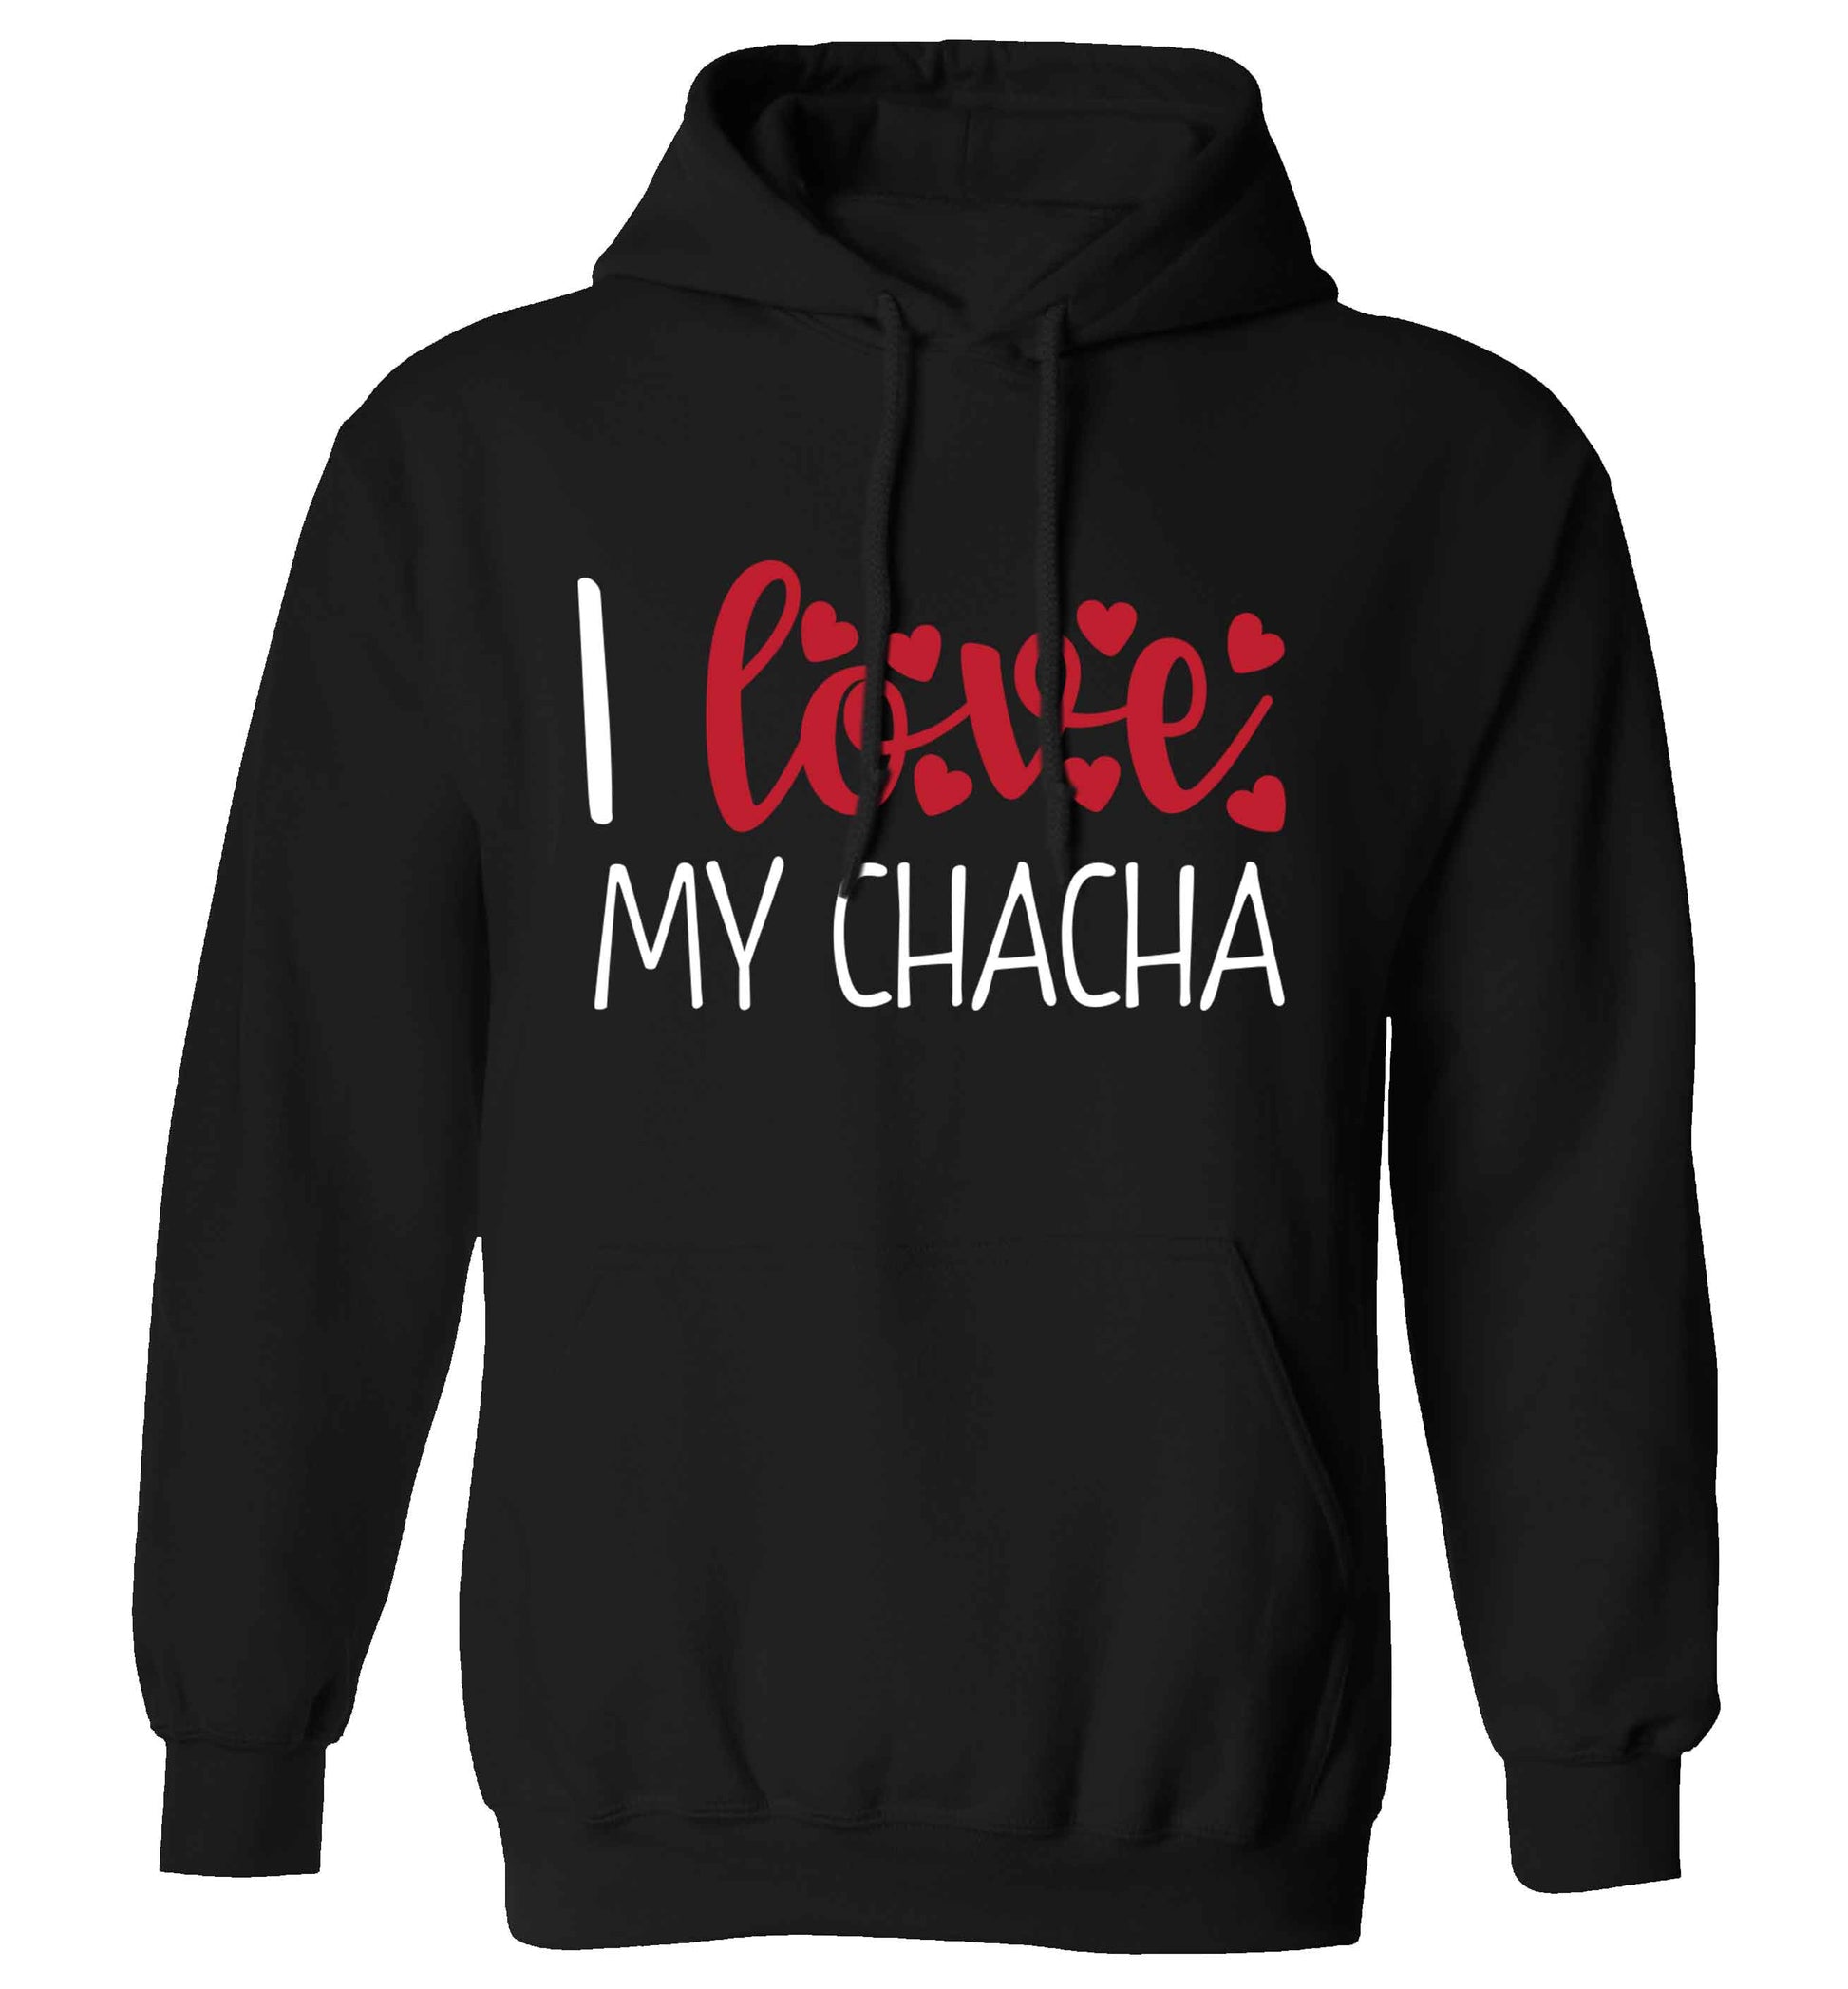 I love my chacha adults unisex black hoodie 2XL